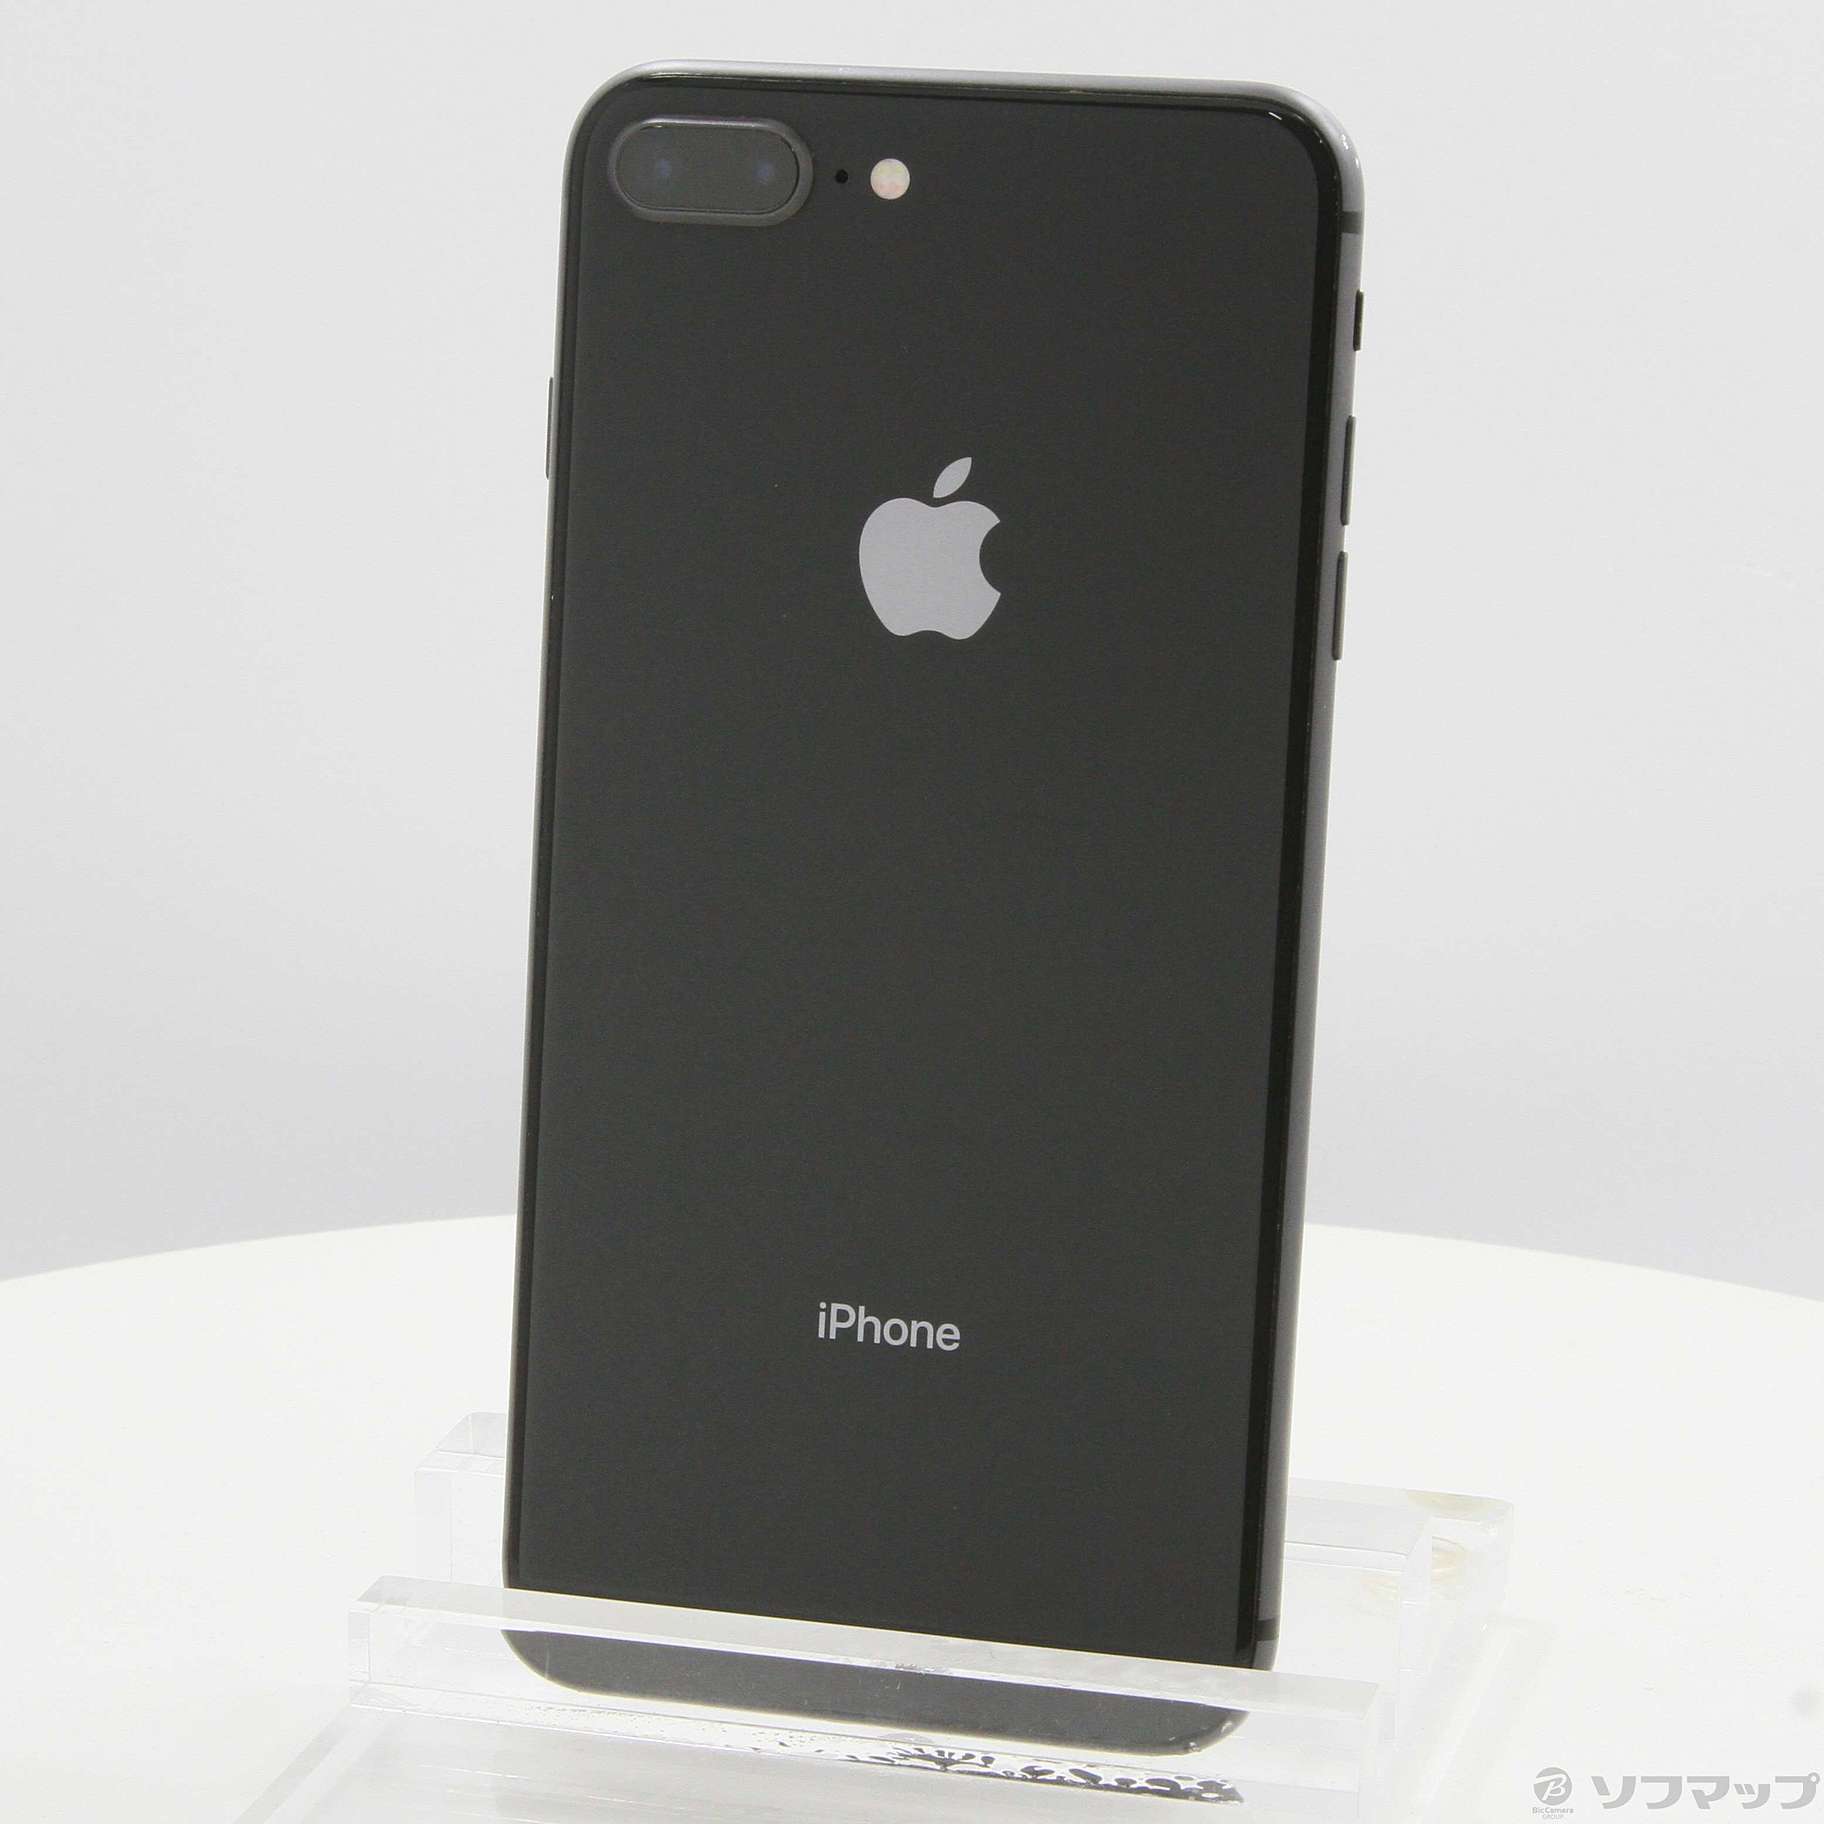 iPhone 8 Plus 64GB Space gray